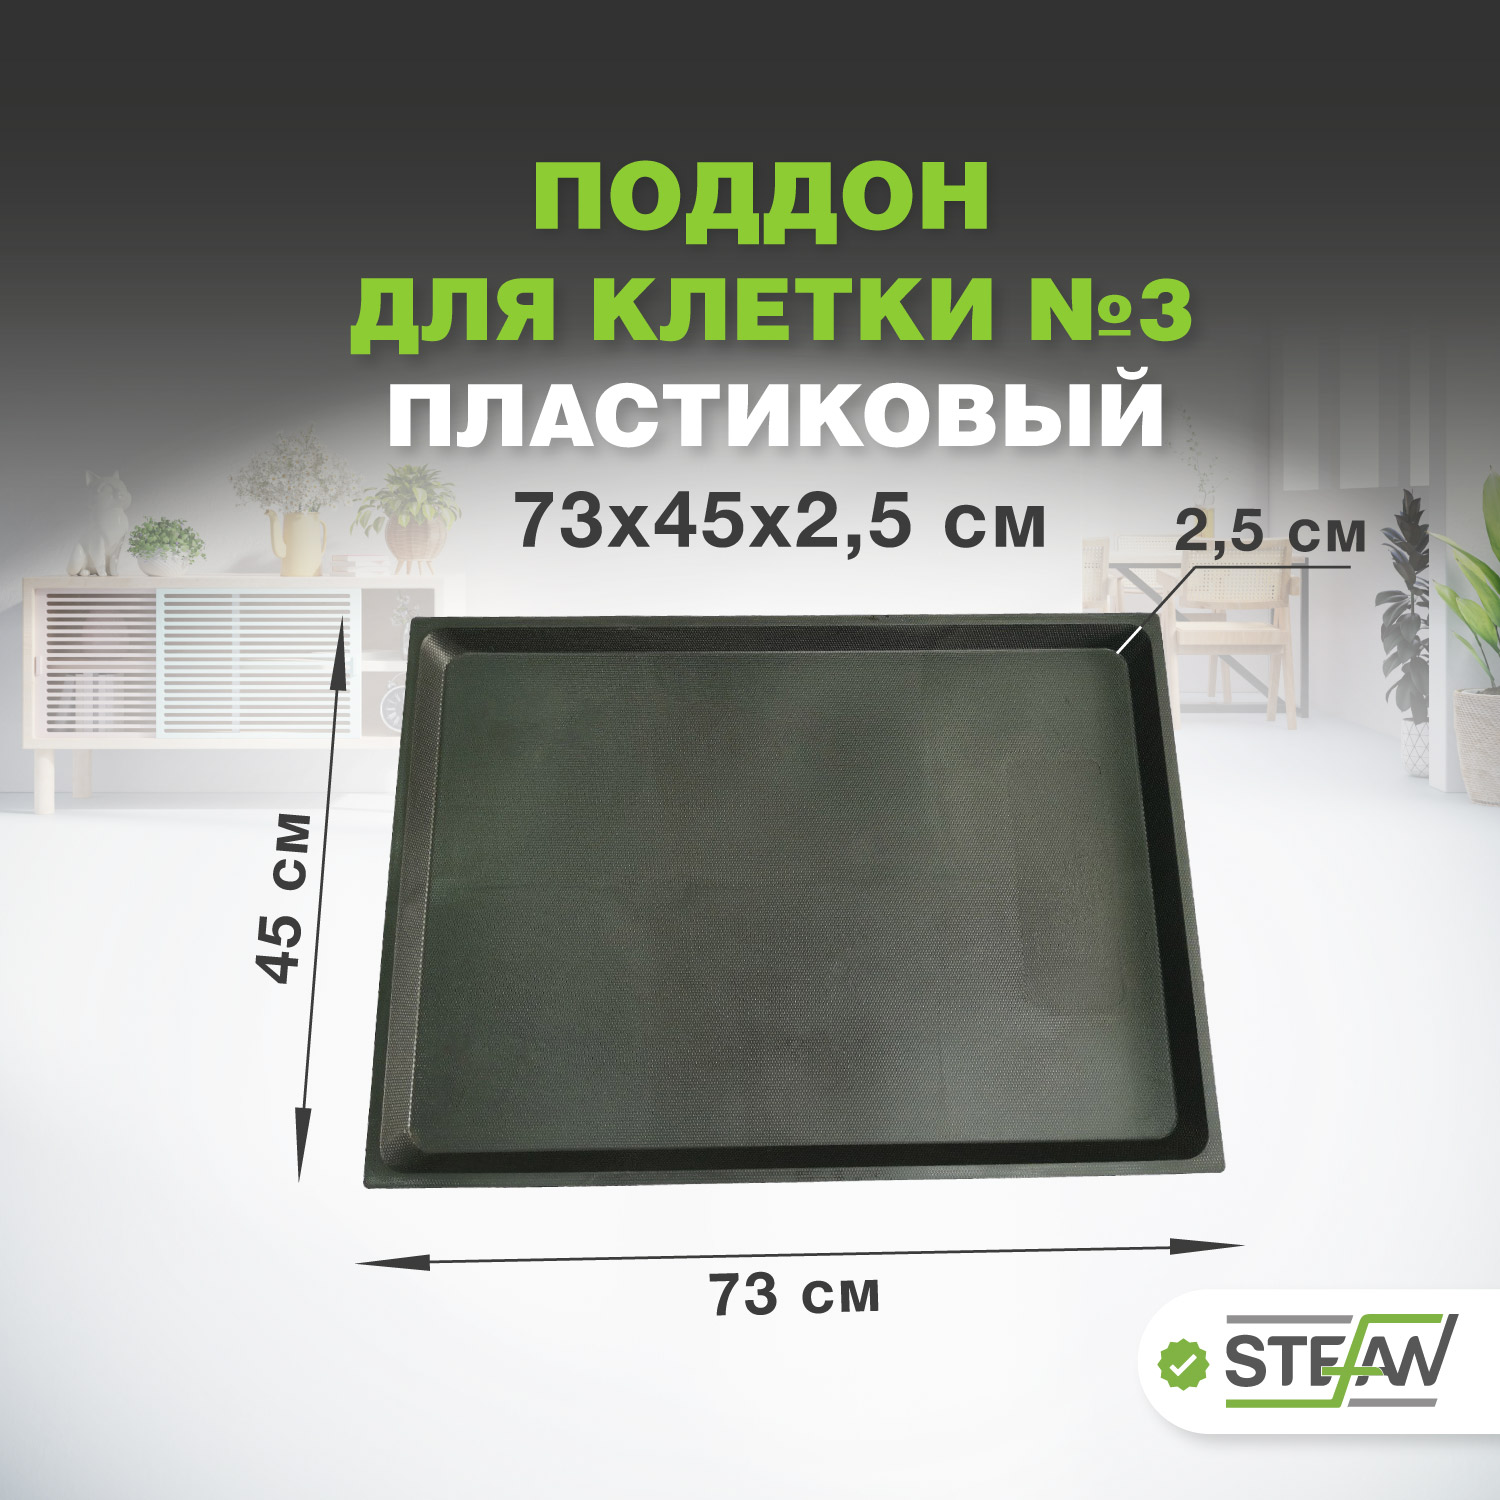 Поддон для клетки STEFAN №3, черный, пластик, 73 х 45 x 2.5 см